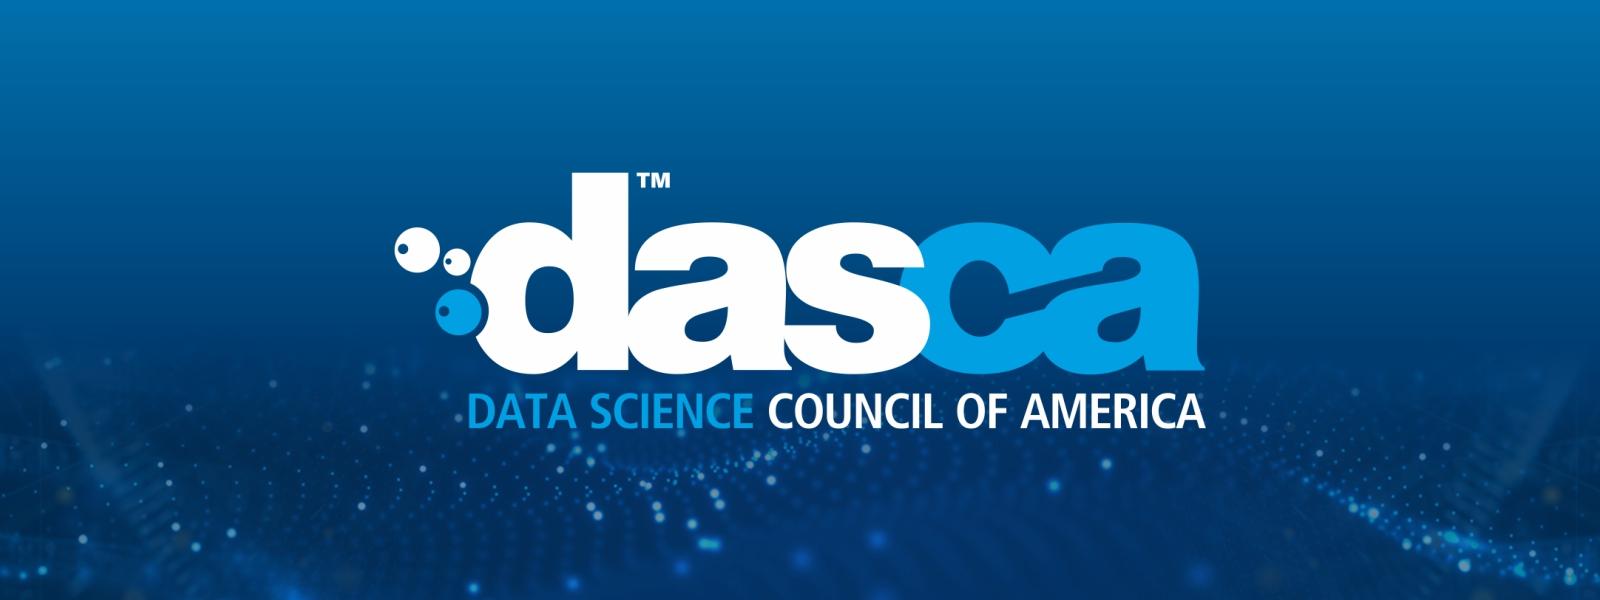 Product Exam Development | Data Science Council of America | DASCA image